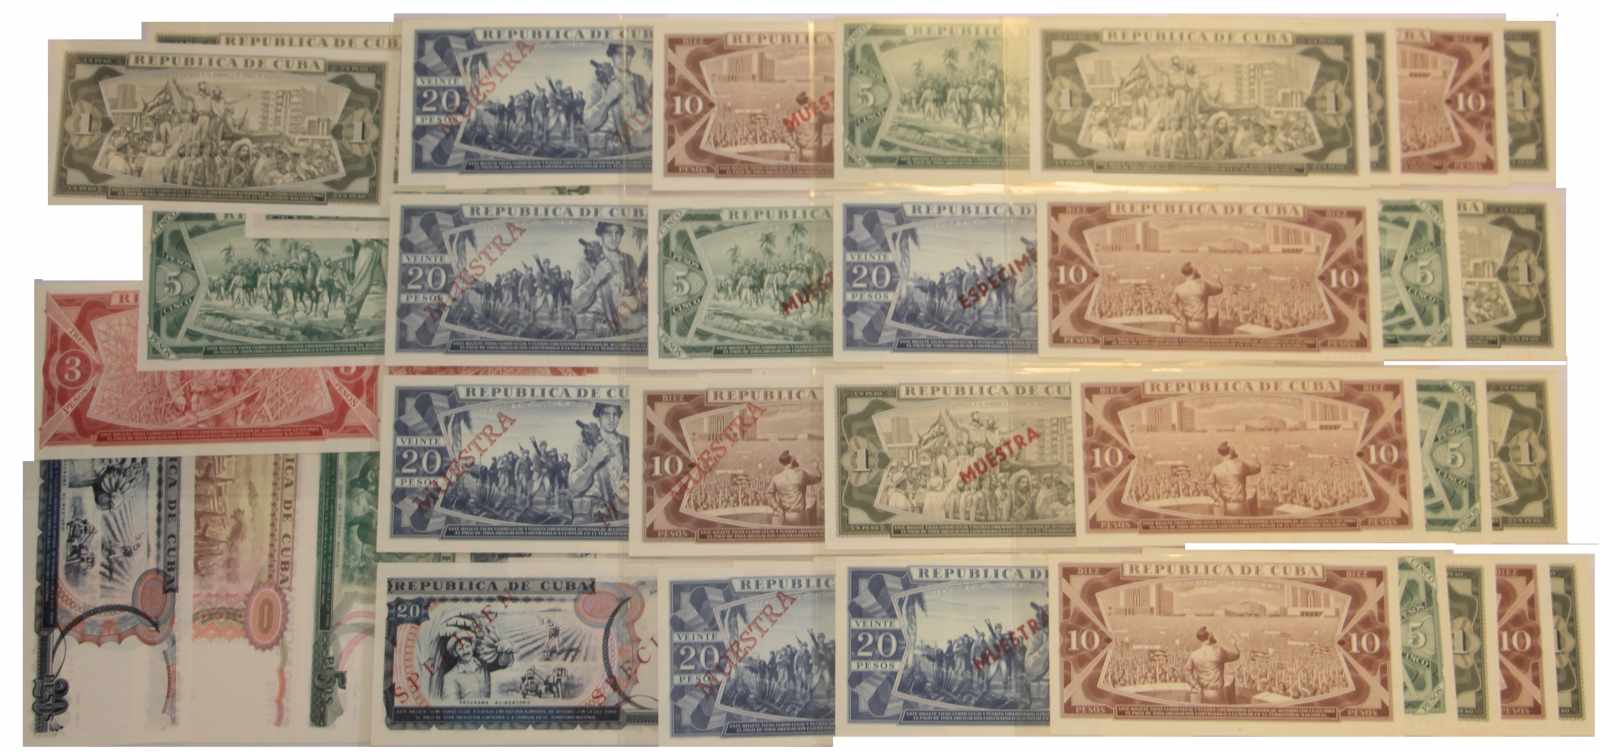 Cuba. Pesos. Bankbiljet. 1961-1991. - UNC. (Pick. Diverse Specimen). Lot 66 notes. - UNC. Cuba. - Image 2 of 2